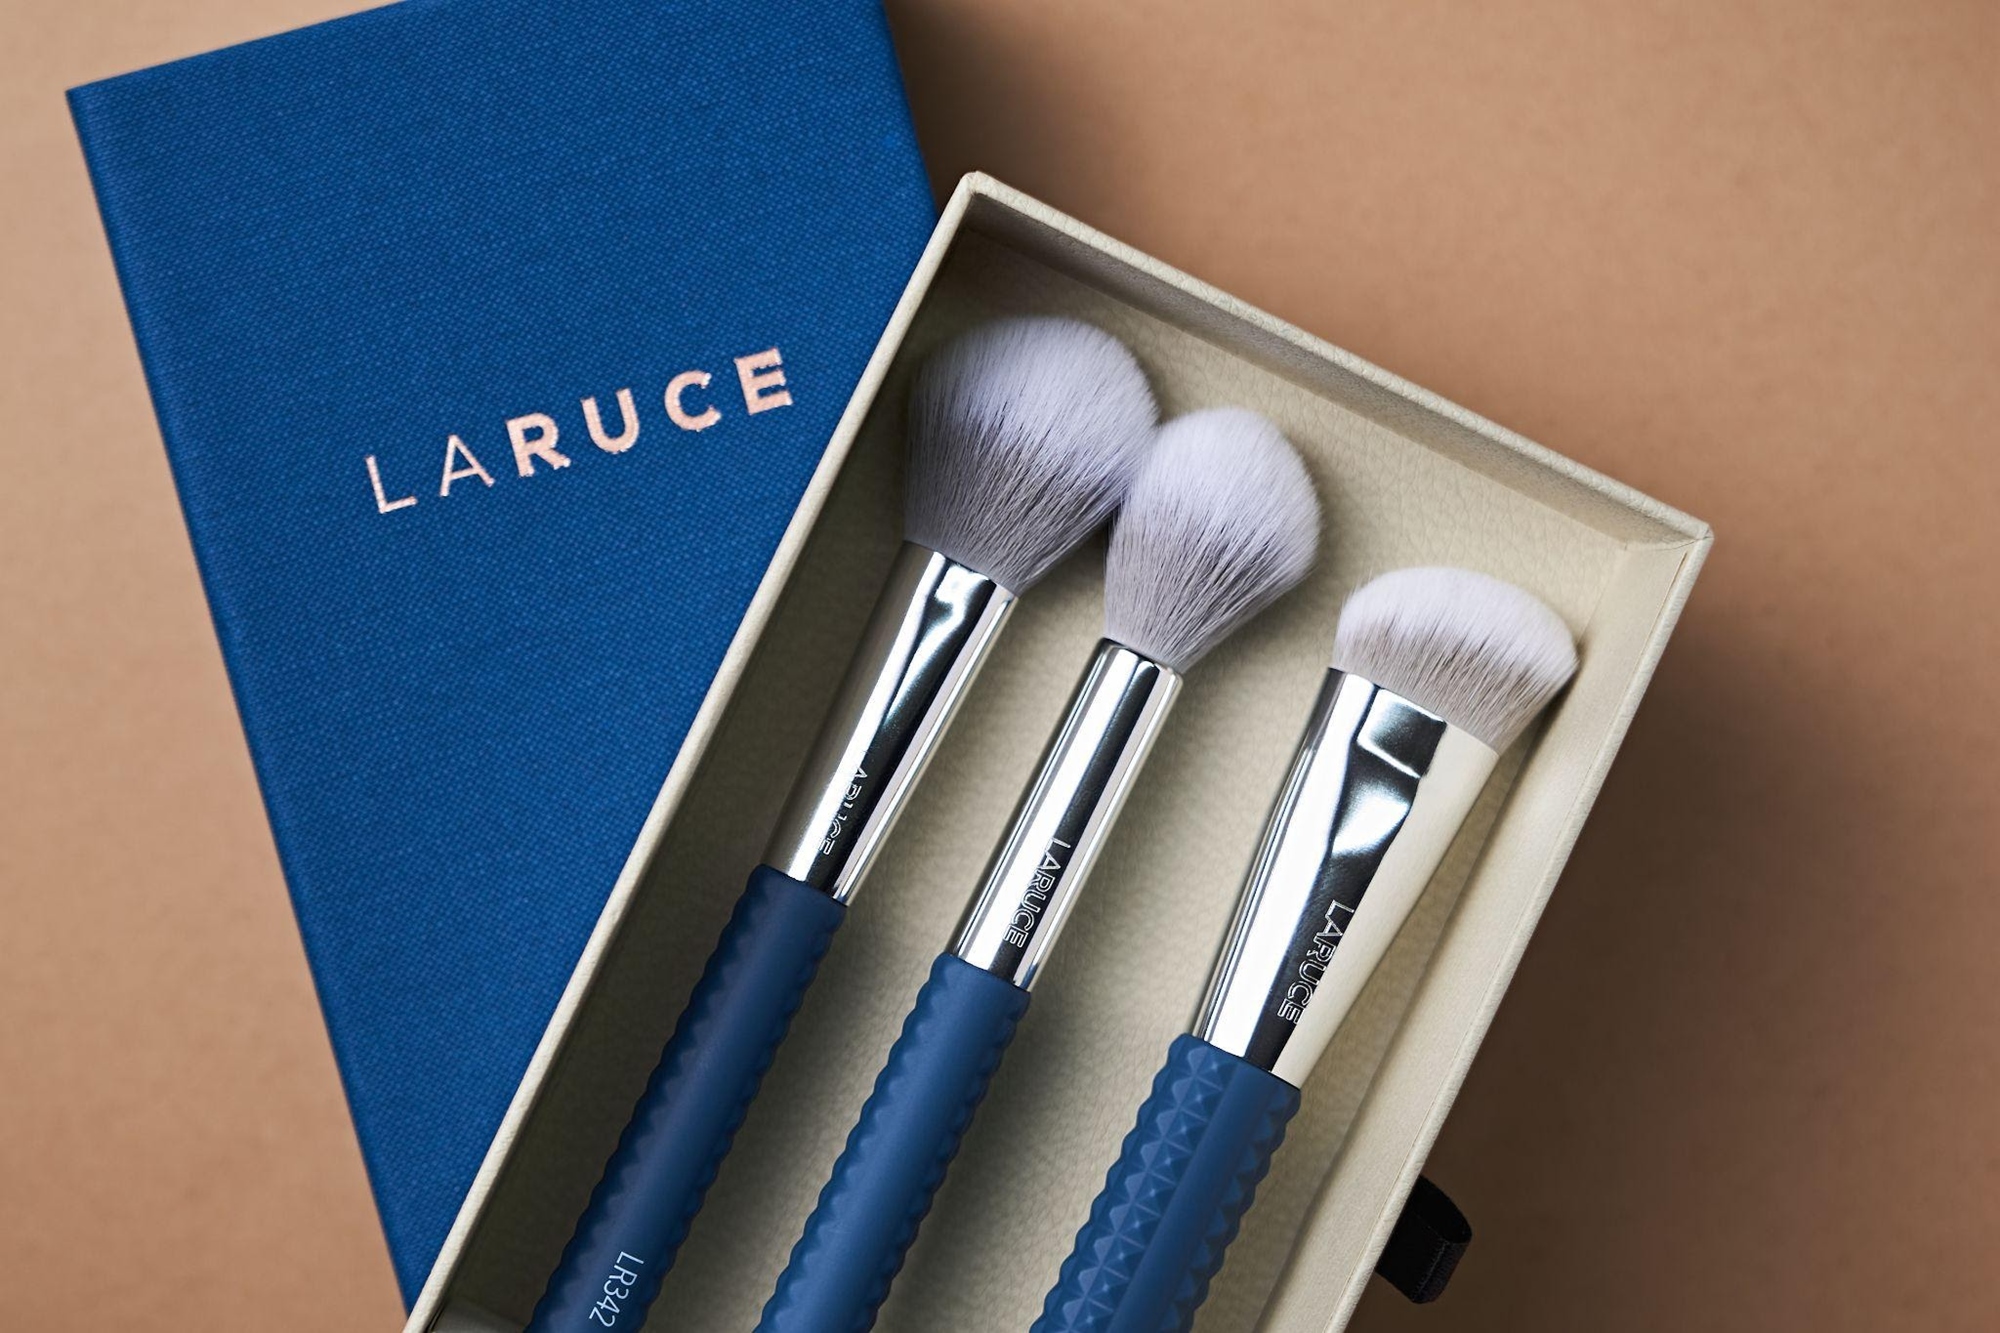 LARUCE Beauty Unveils Limited-Edition Cruelty-Free & Vegan Brush Sets